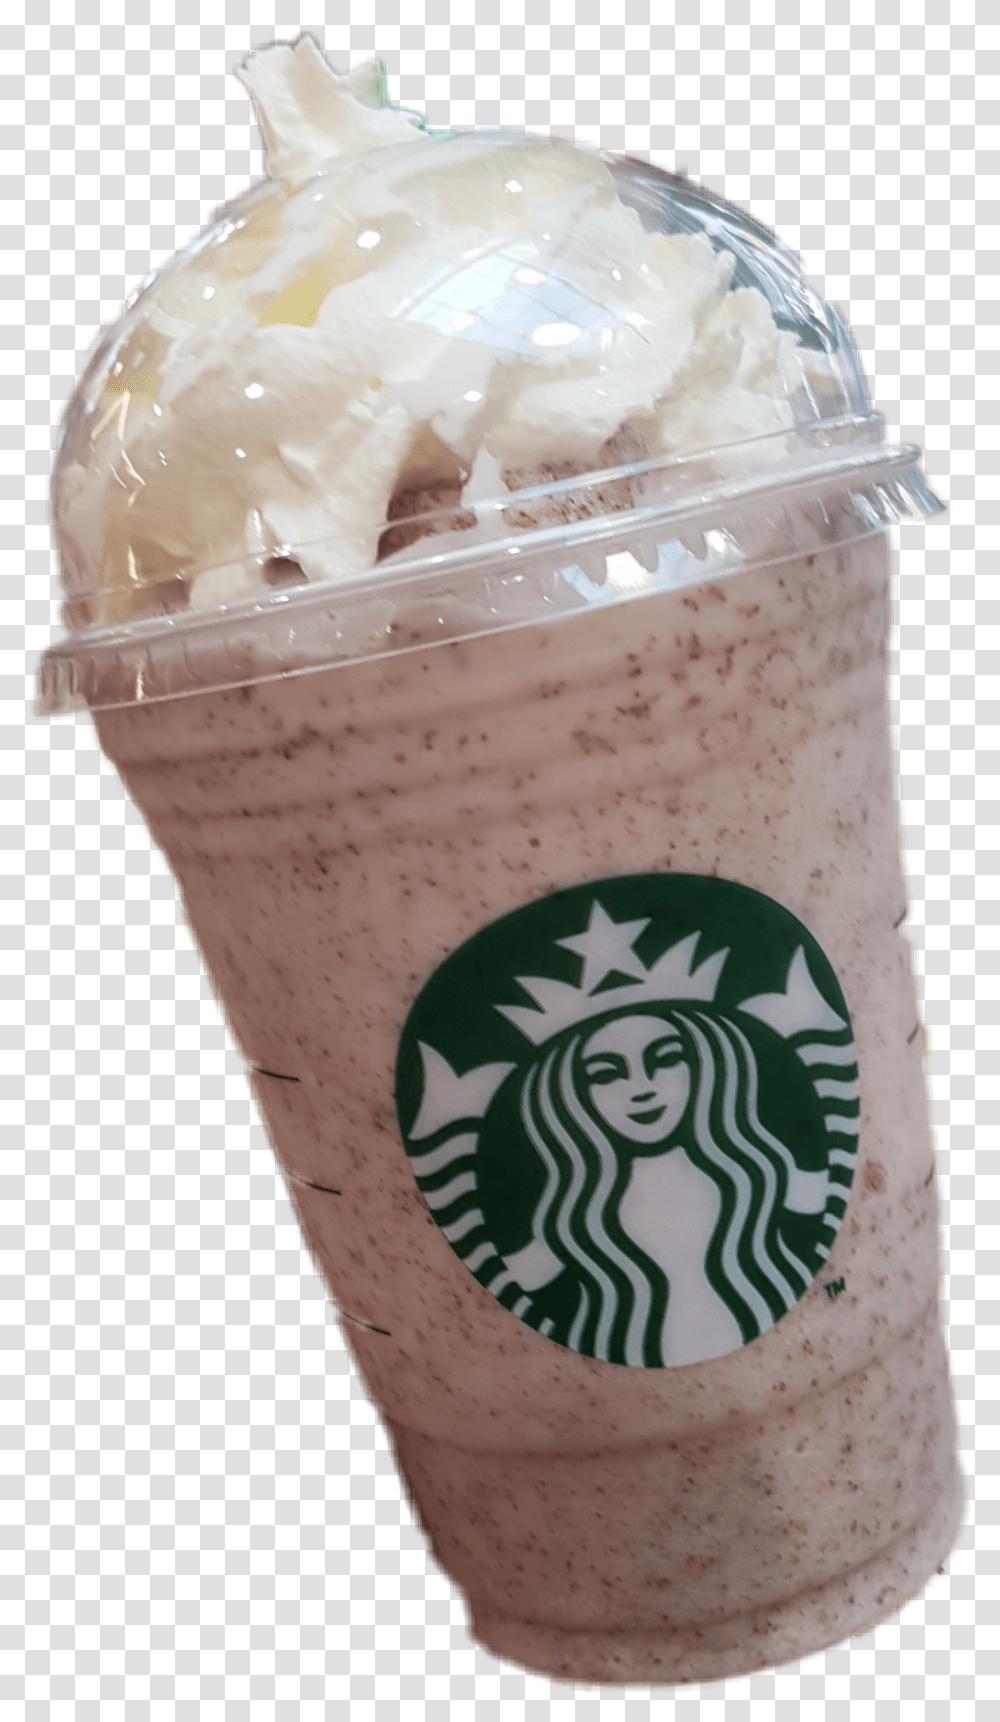 Starbucks Frappuccino Starbucks New Logo 2011, Juice, Beverage, Drink, Cream Transparent Png